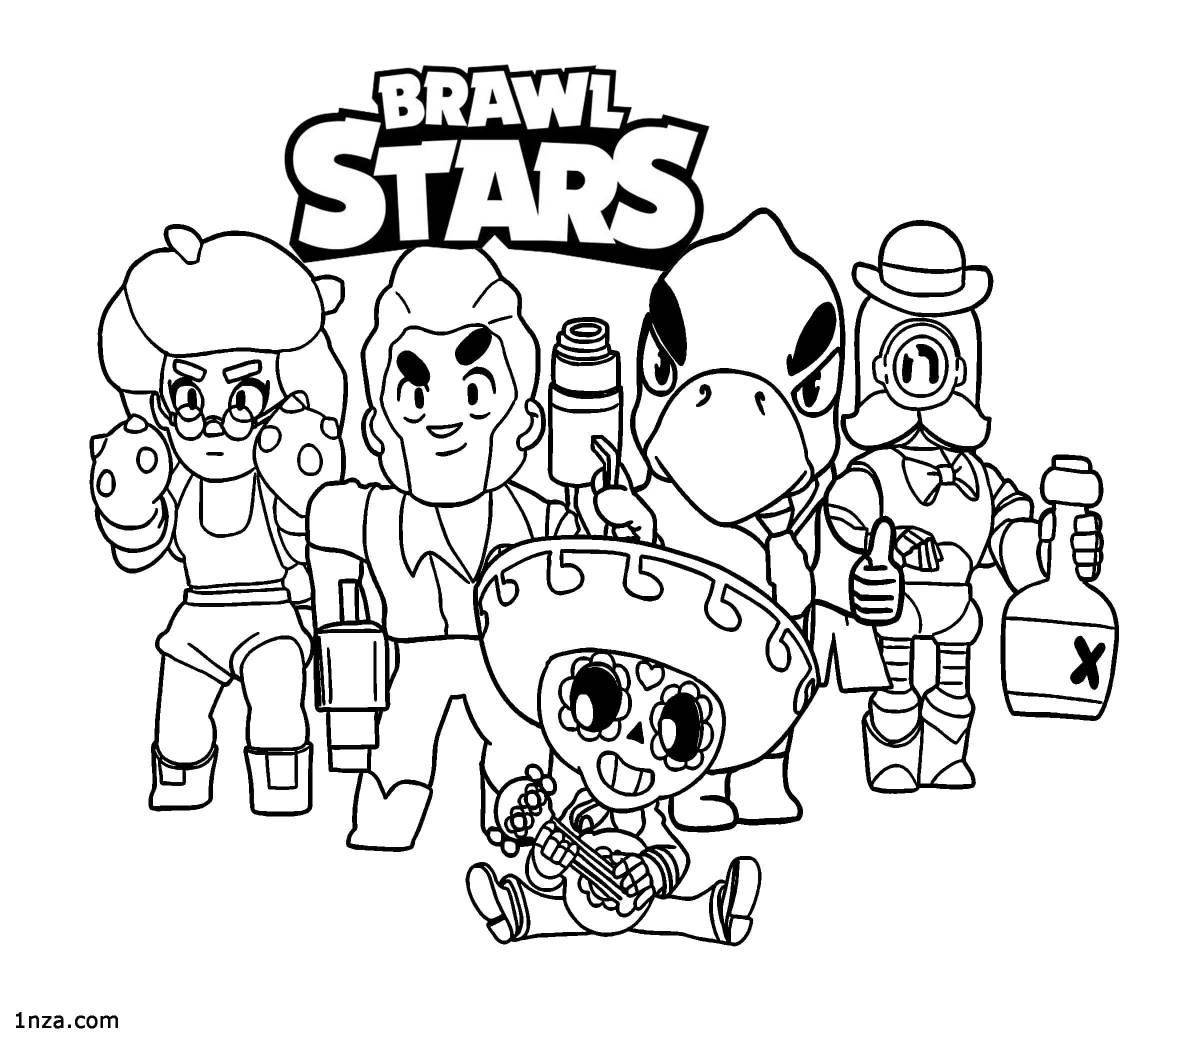 Playful bravo stars max skin coloring page